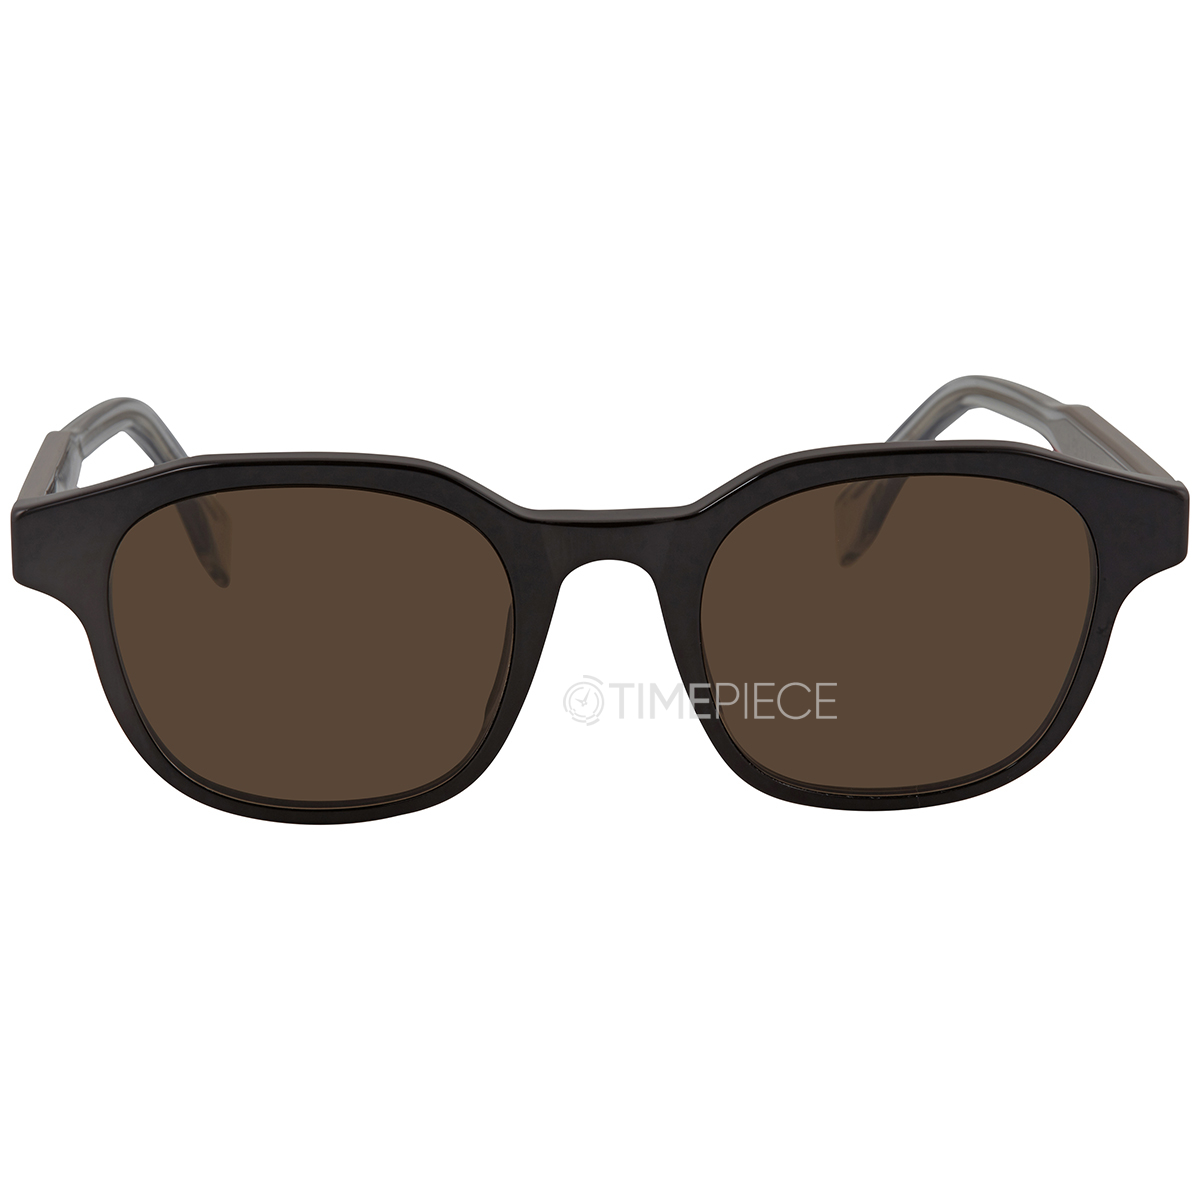 FENDI FF-M0070/S 0807/70 Black Sunglasses Brown Lens